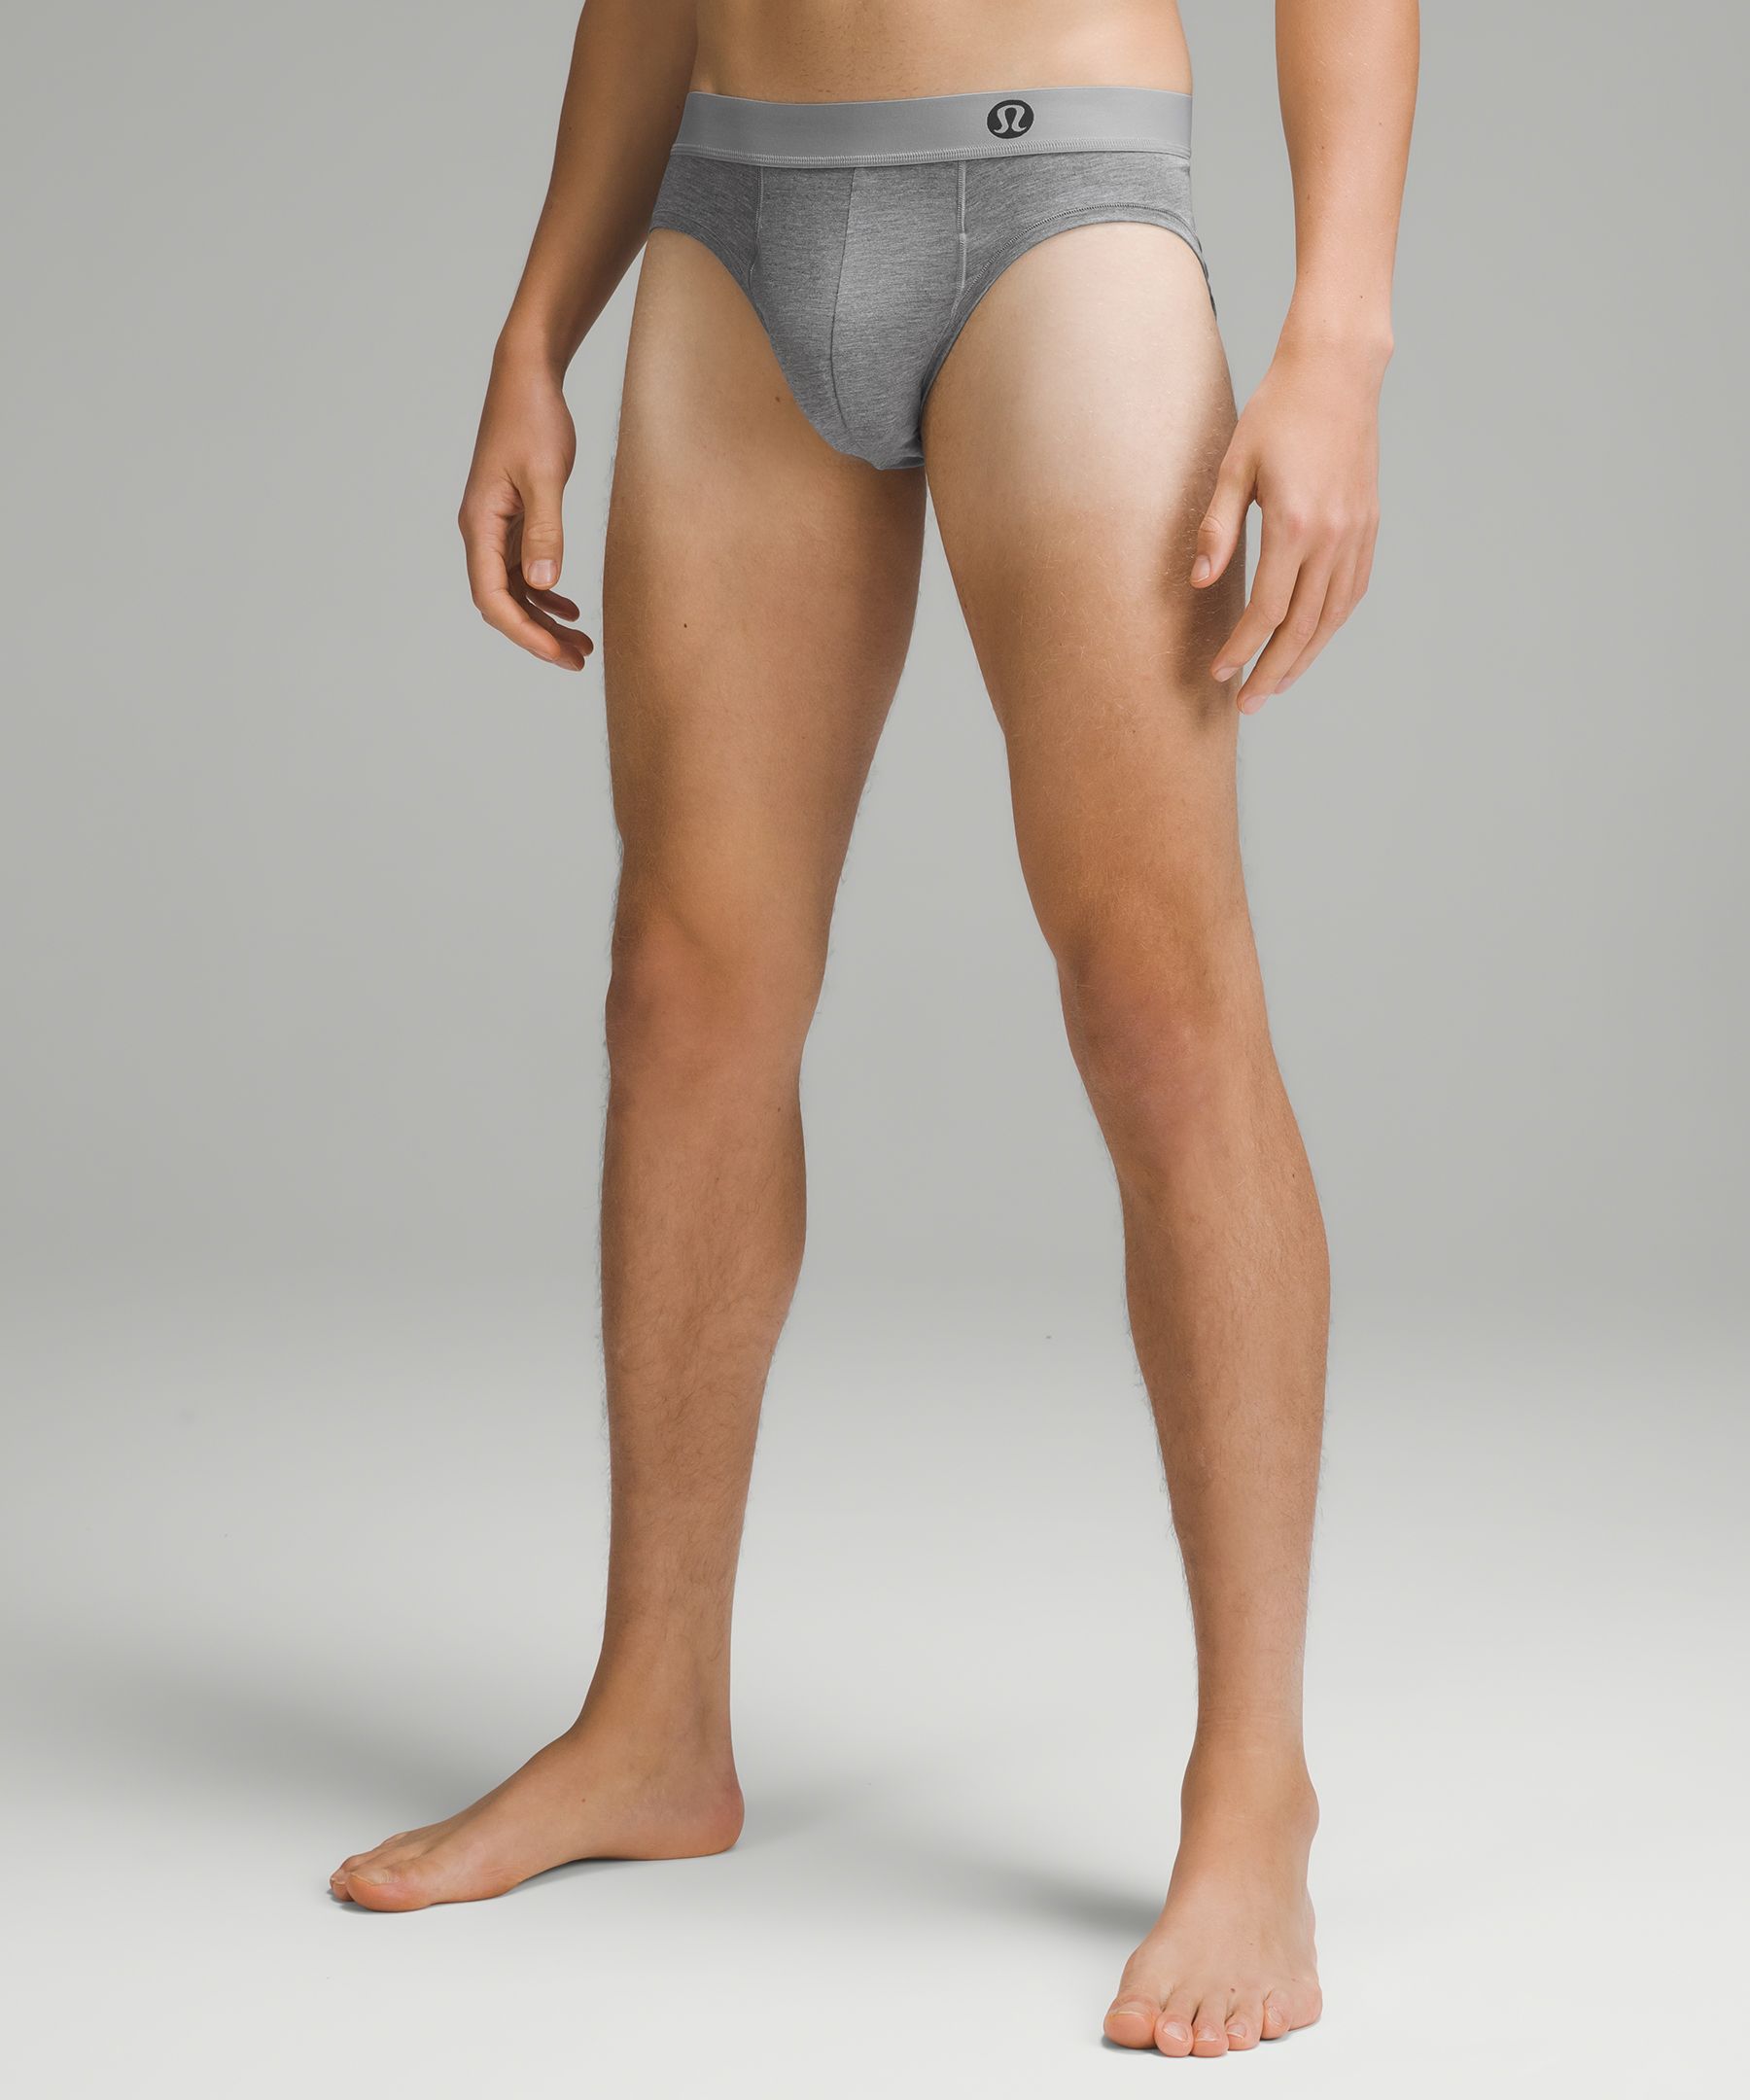 Lurrose 5pcs Disposable Underwear Travel Panties High Cut Briefs Mens Pure  Cotton Briefs Underpants Incontinence for Fitness